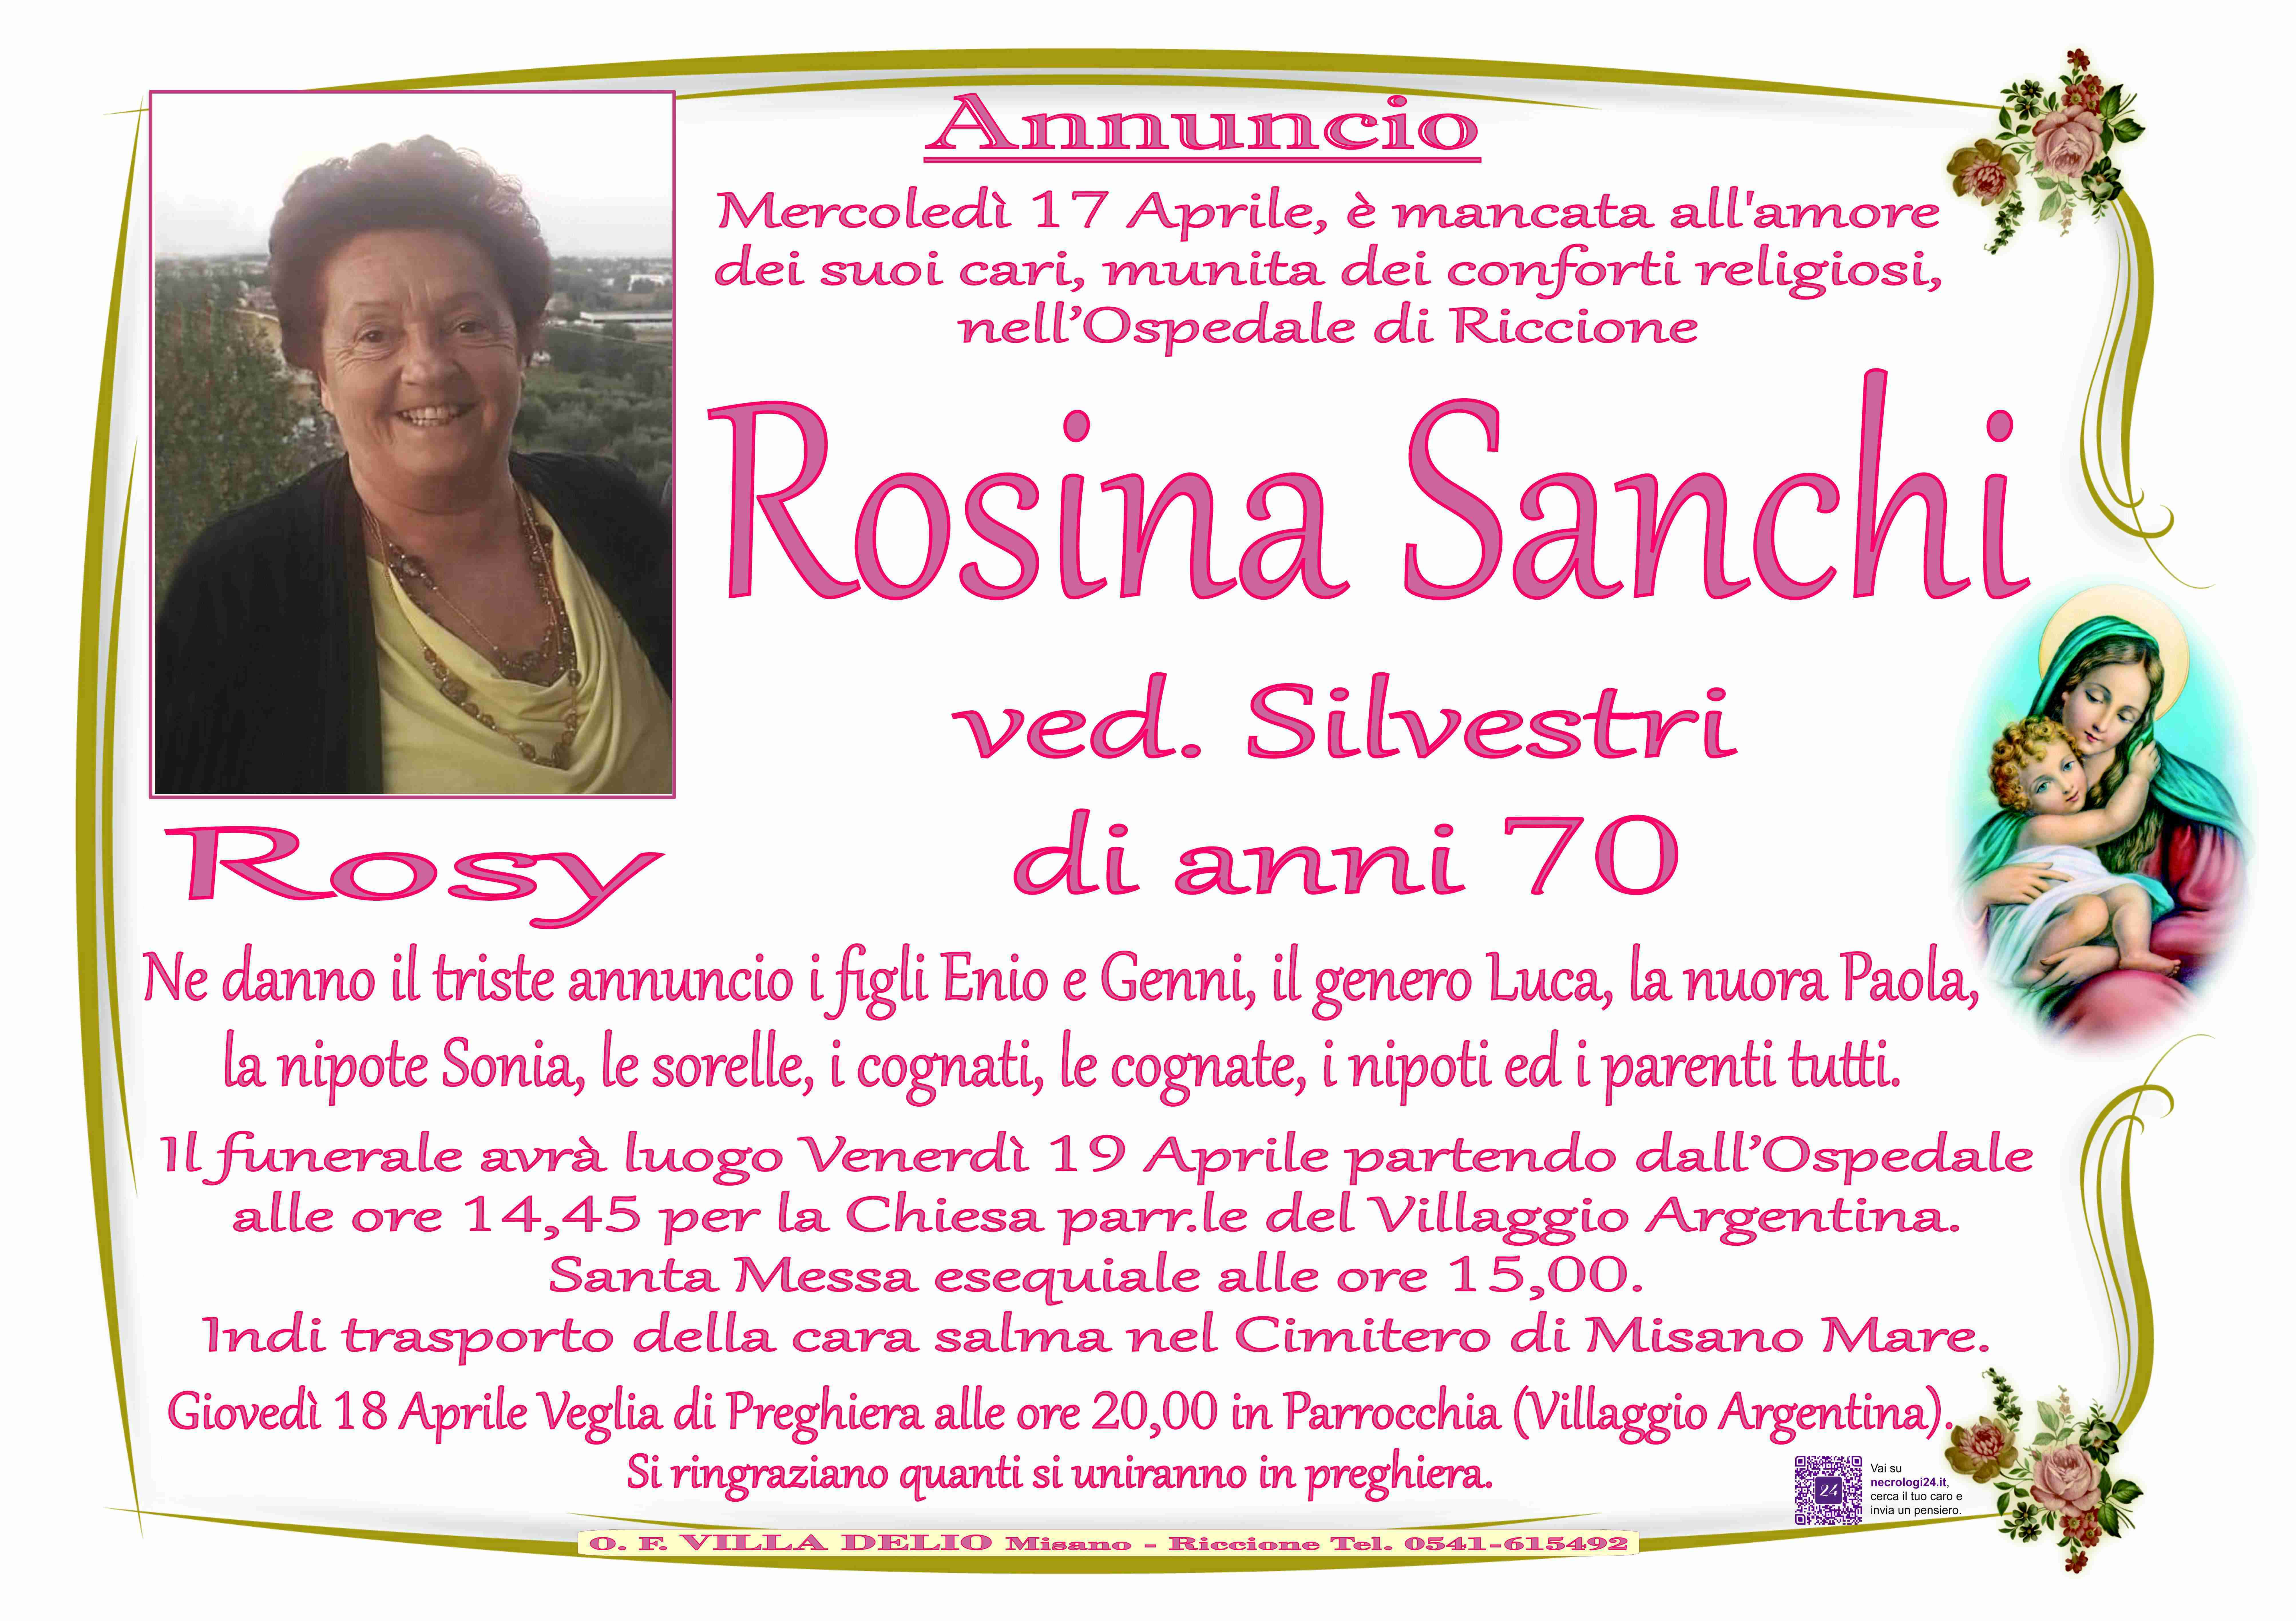 Rosina (Rosy) Sanchi